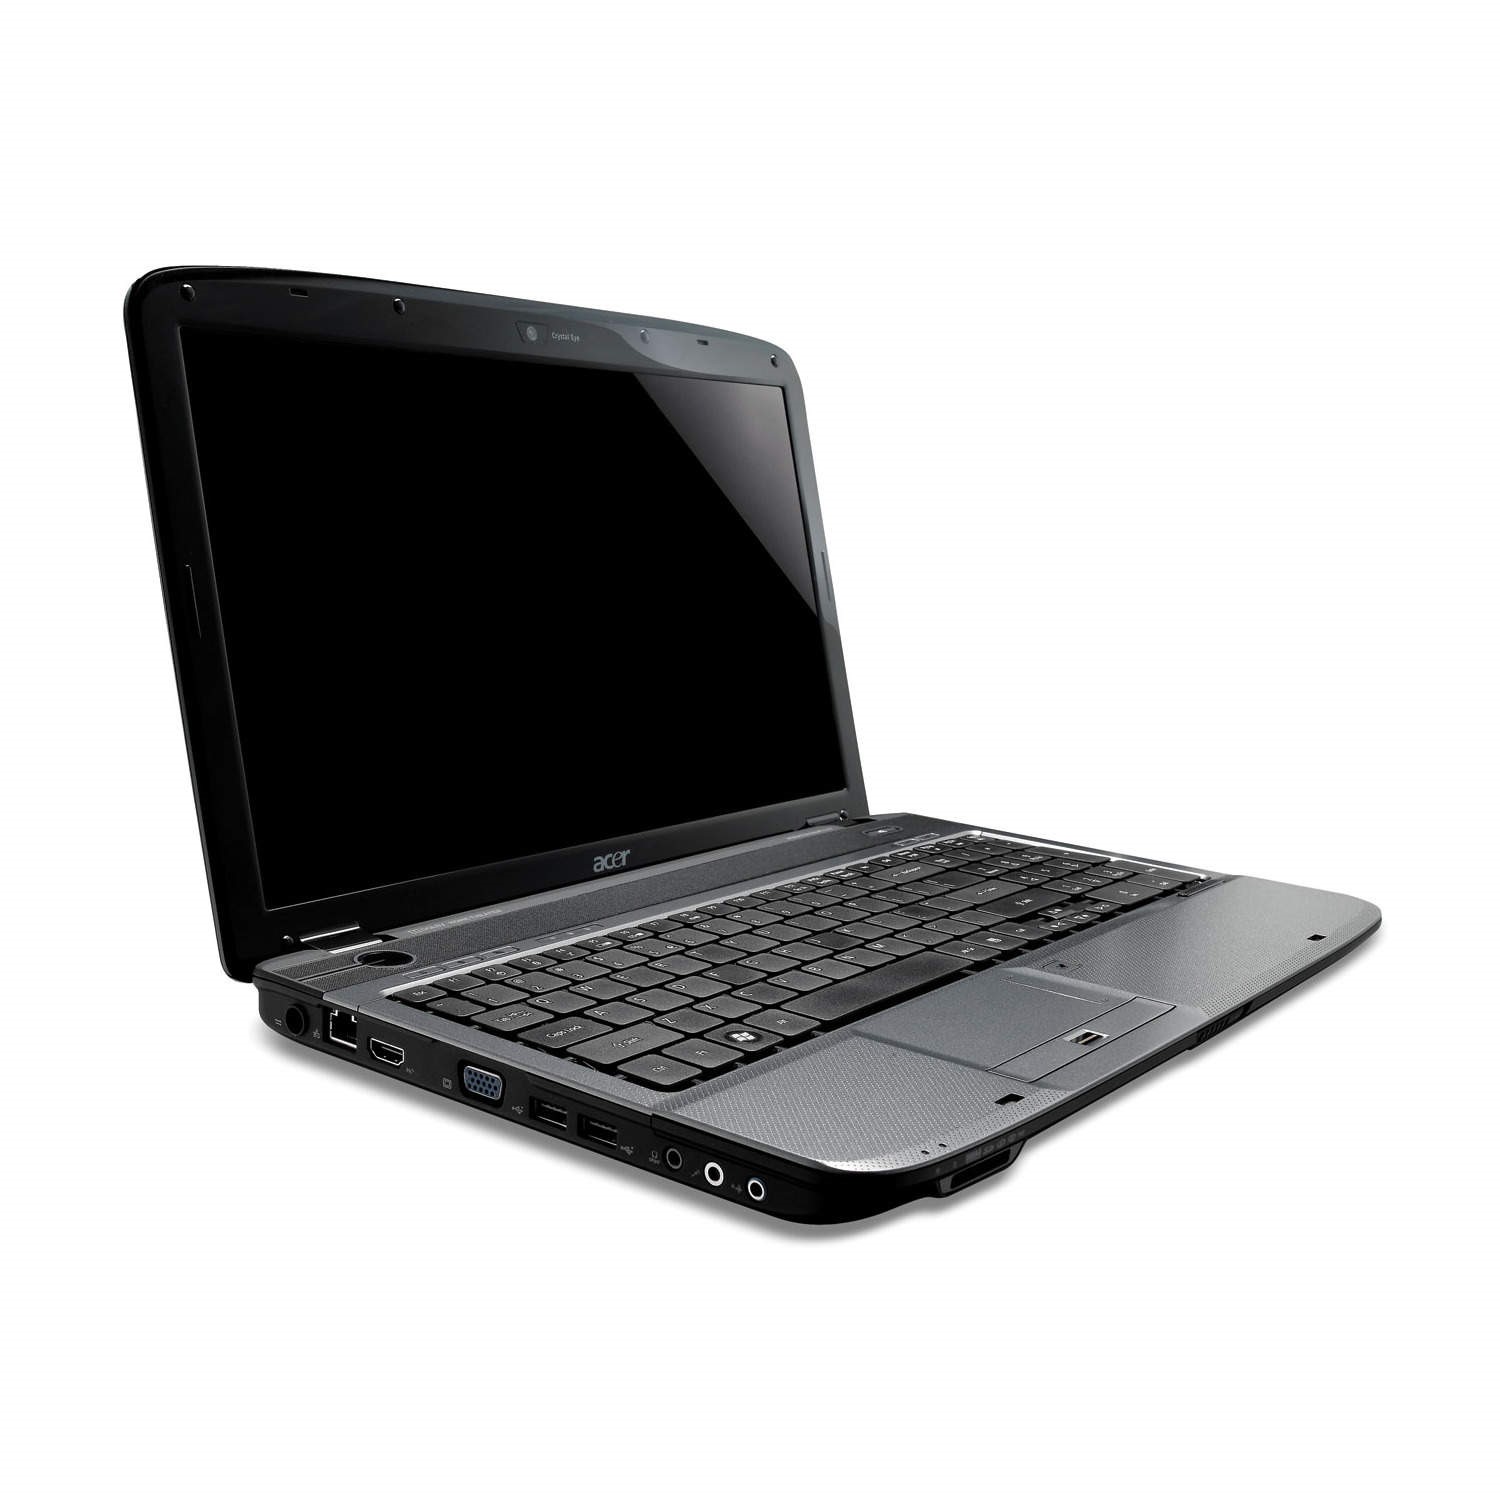 Ноутбук Acer Aspire 5738g-663g25mi. Acer Aspire 5542g. Acer Aspire 5740 DG. Acer Aspire 5741g-333g25mi.